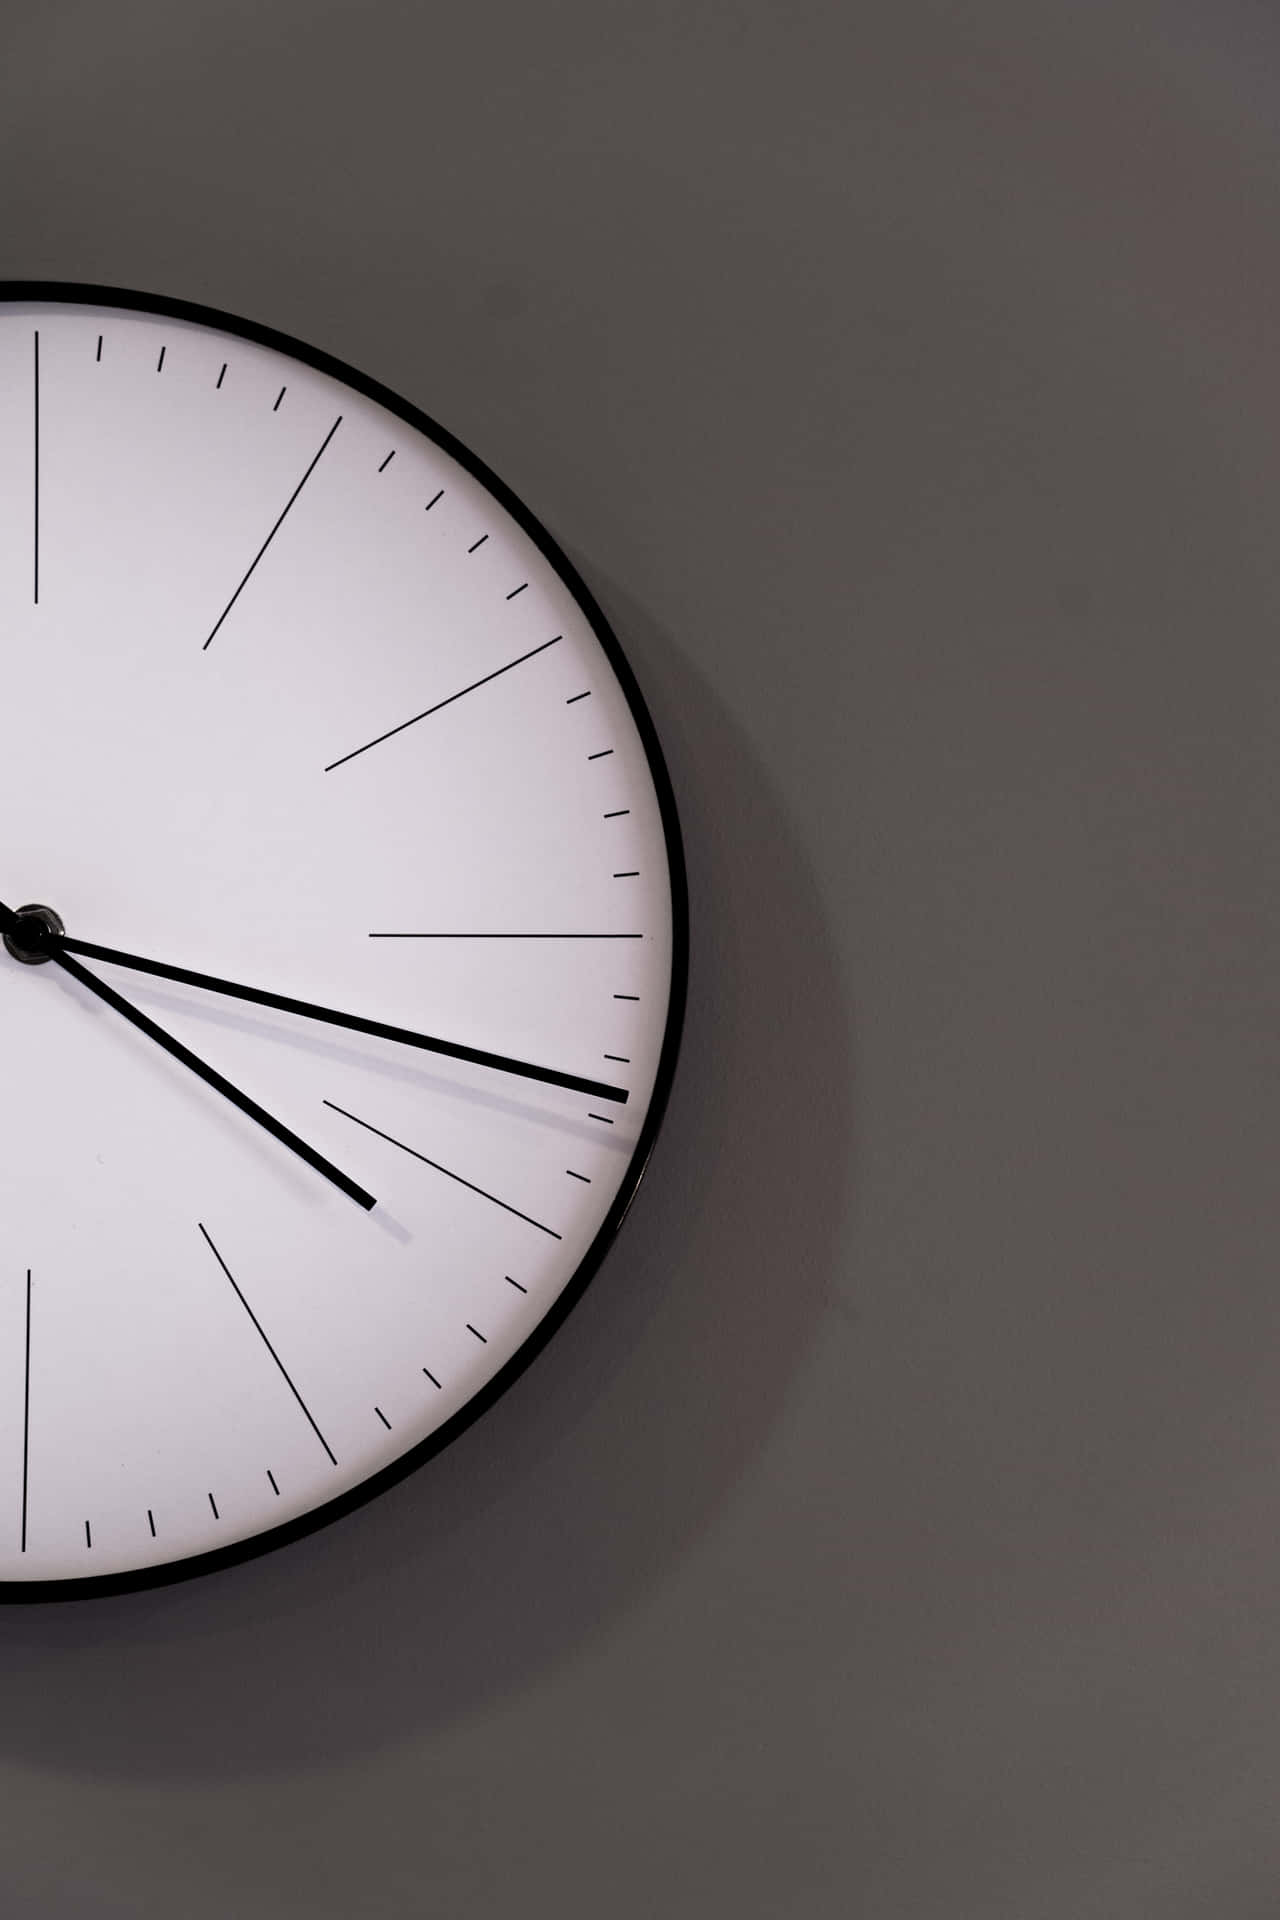 A clock amid an antique aesthetic